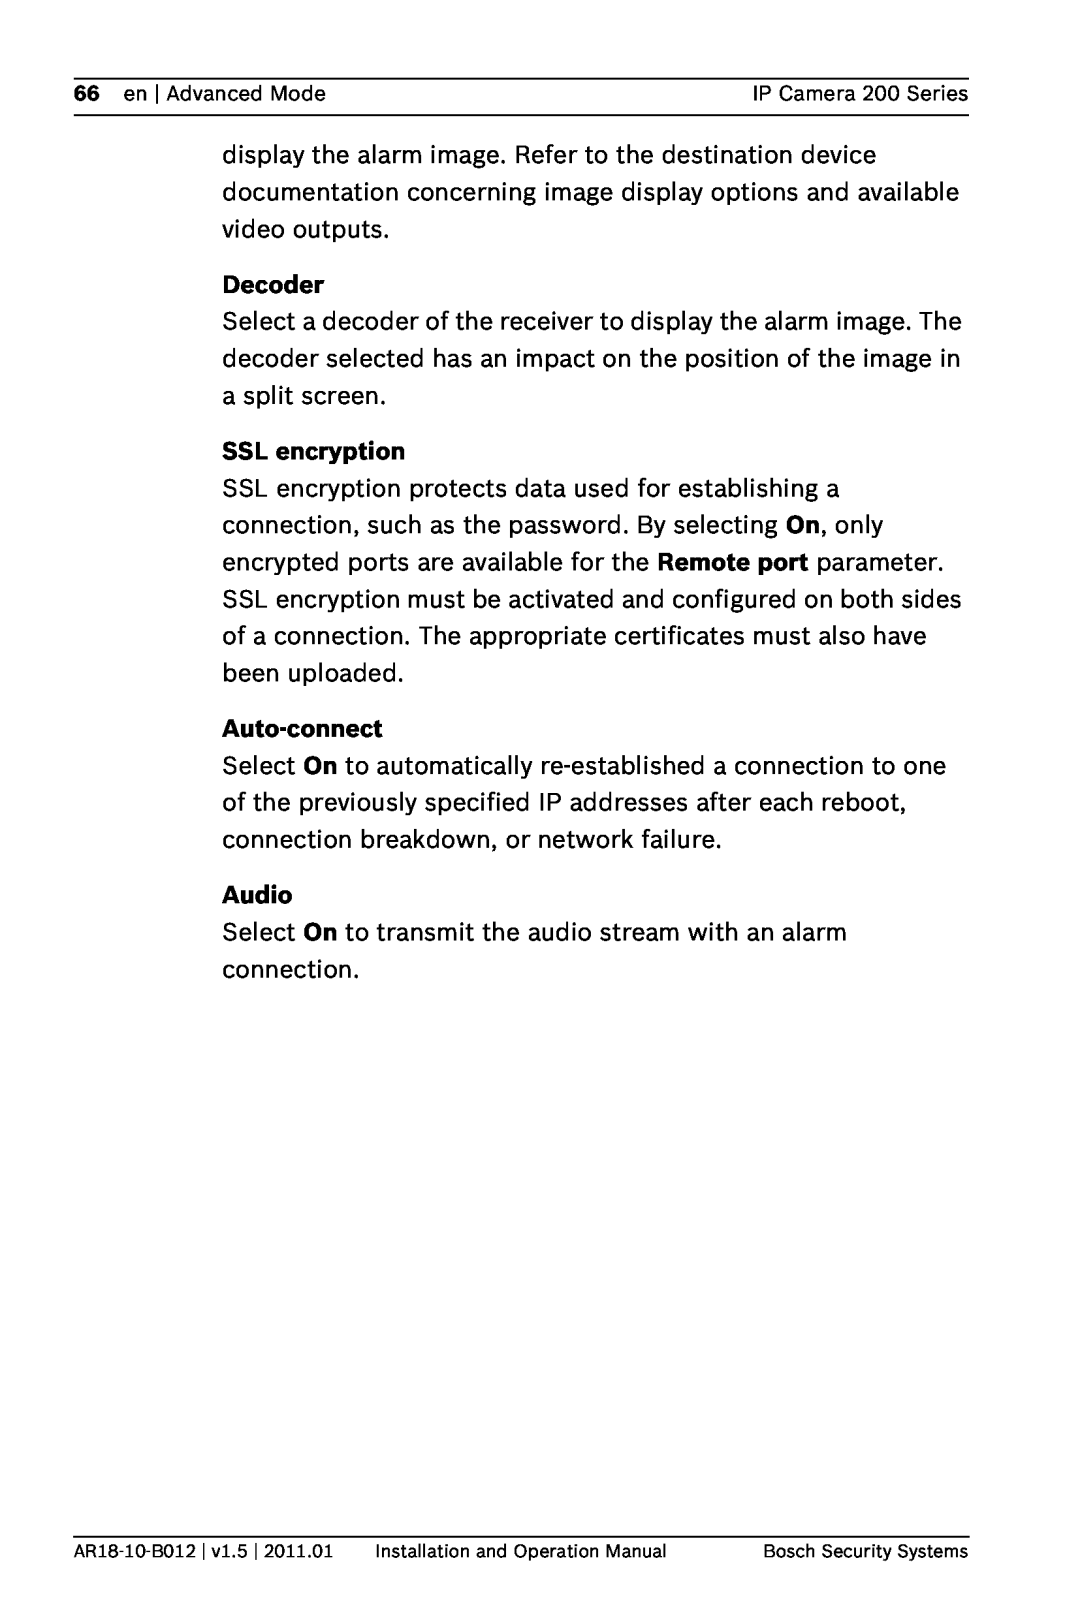 Bosch Appliances NDC-265-P operation manual Decoder, SSL encryption, Auto-connect, Audio 